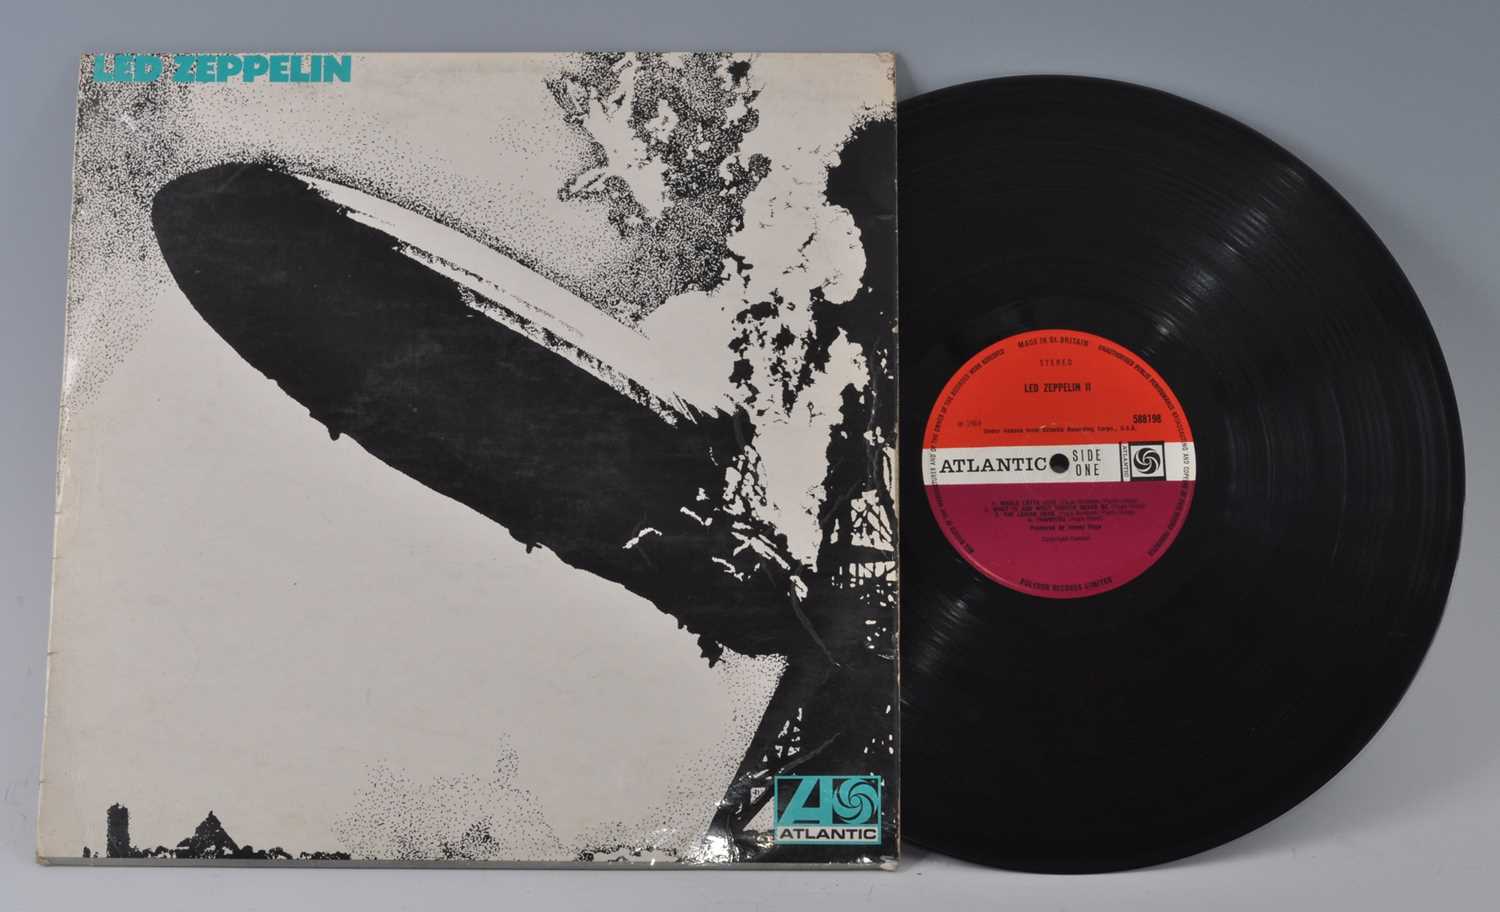 Lot 1139 - Led Zeppelin, Led Zeppelin II, UK 1st